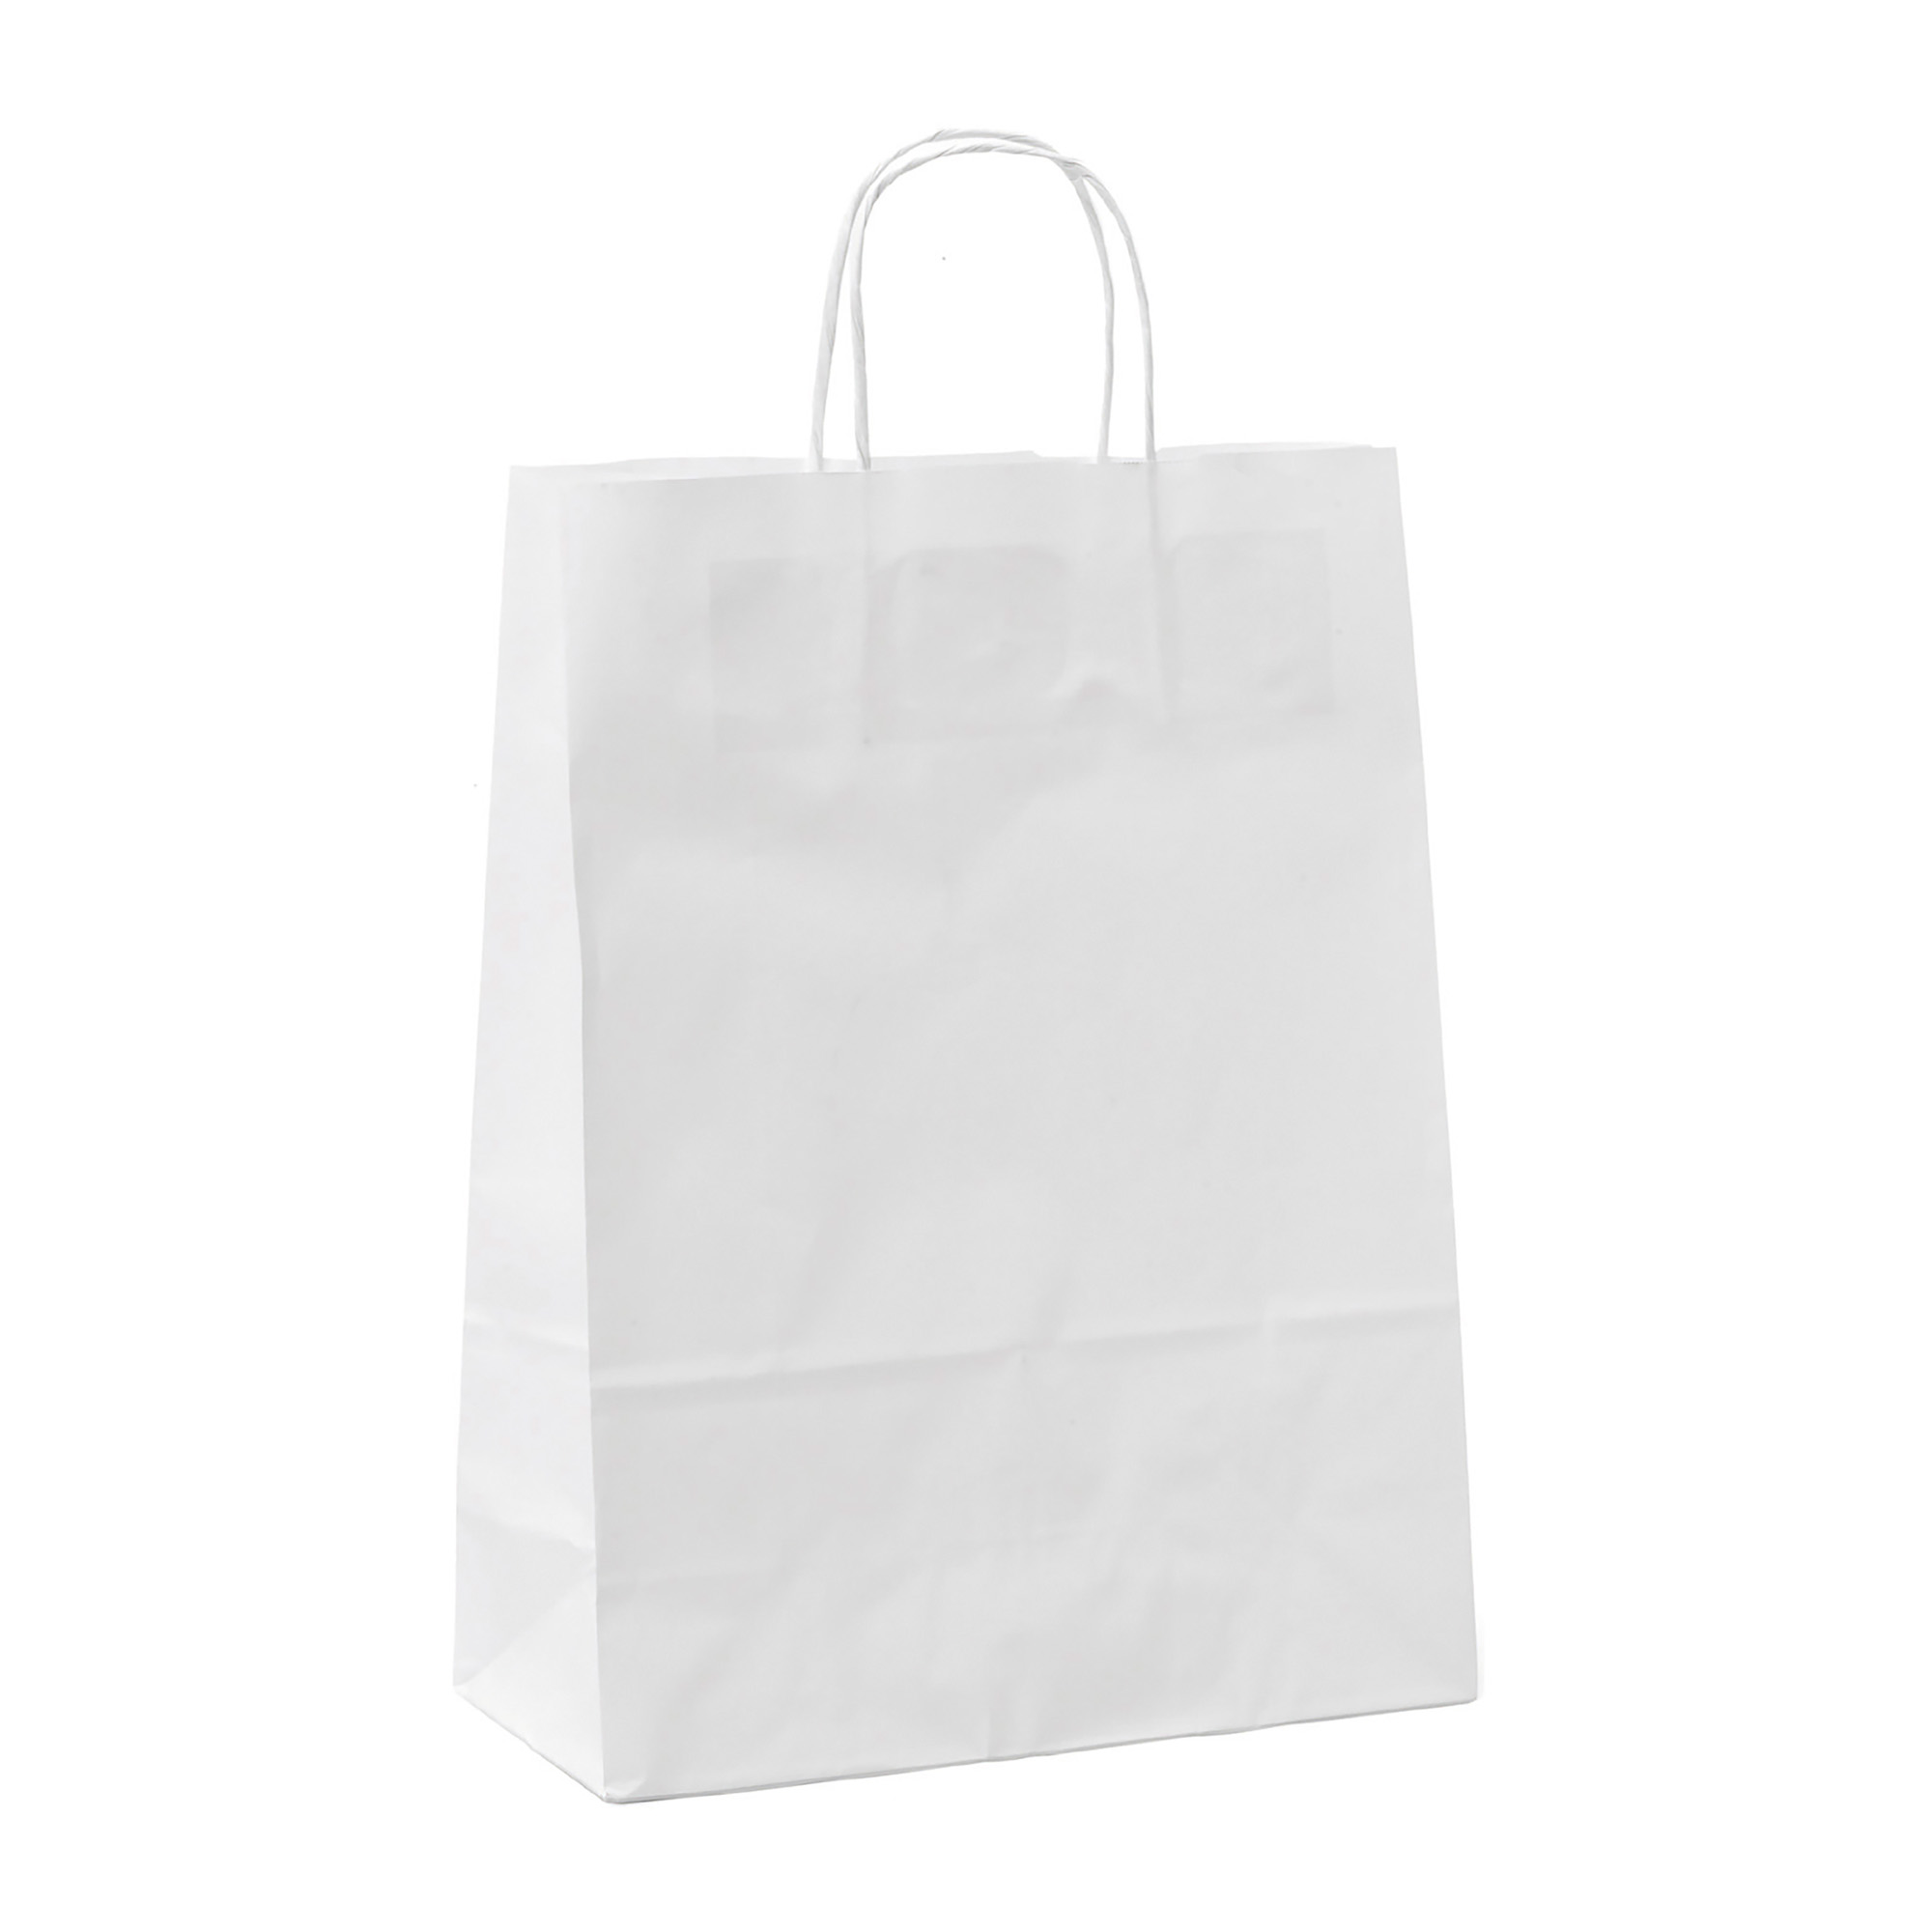 Buste shopper con cordino – carta kraft bianca - Dimensioni (H x L x P): 29  x 22x 10 cm - 25 unità su